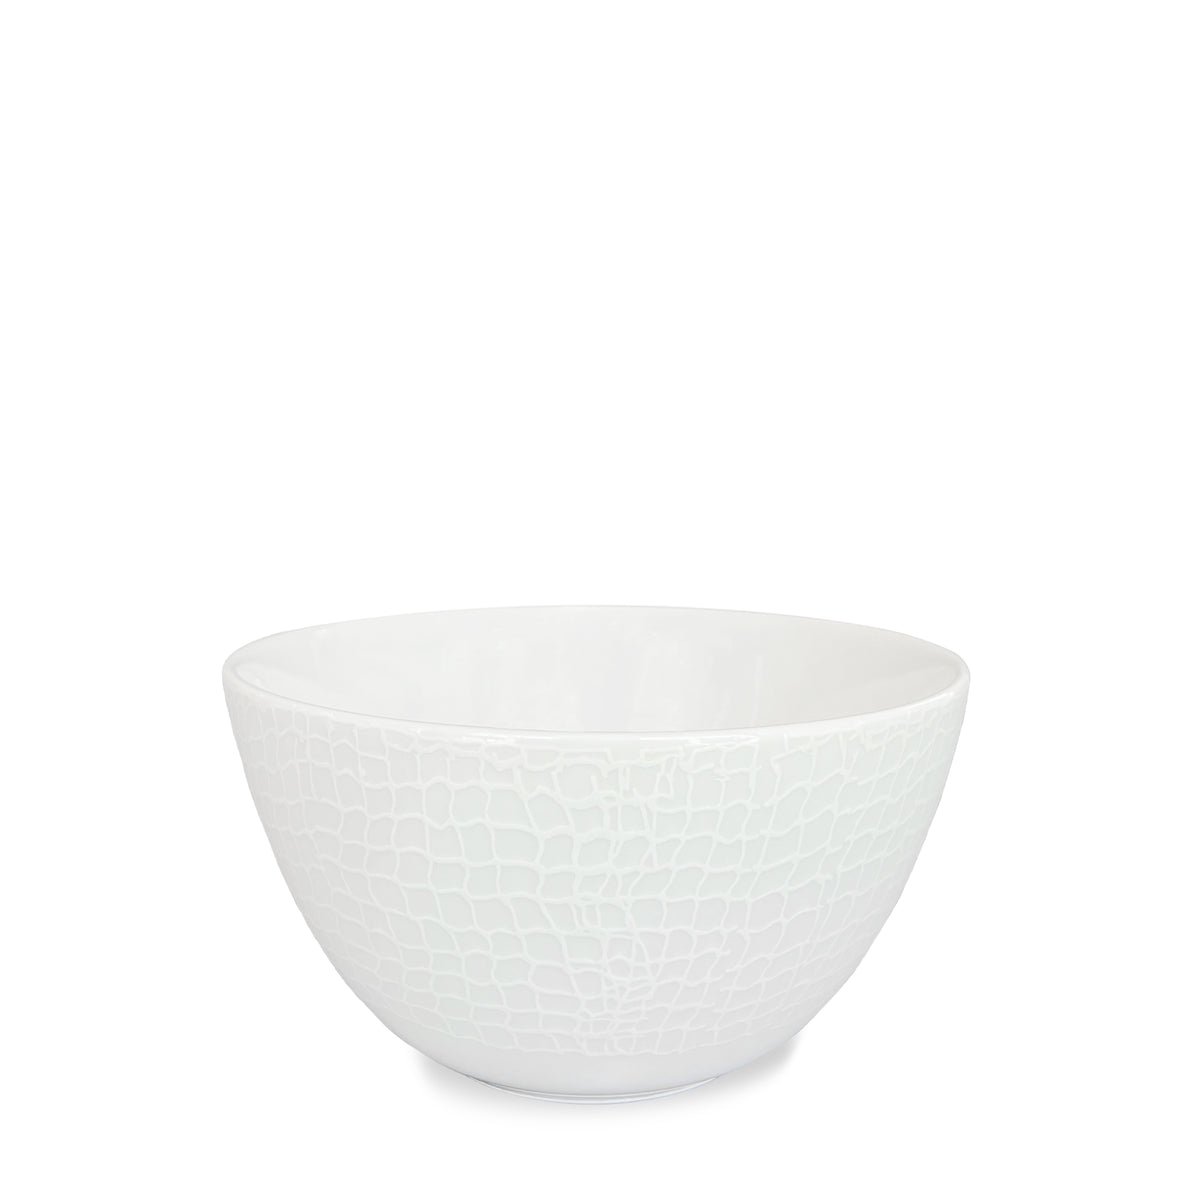 Premium porcelain white fishing net design Catch Tall Cereal Bowl from Caskata.